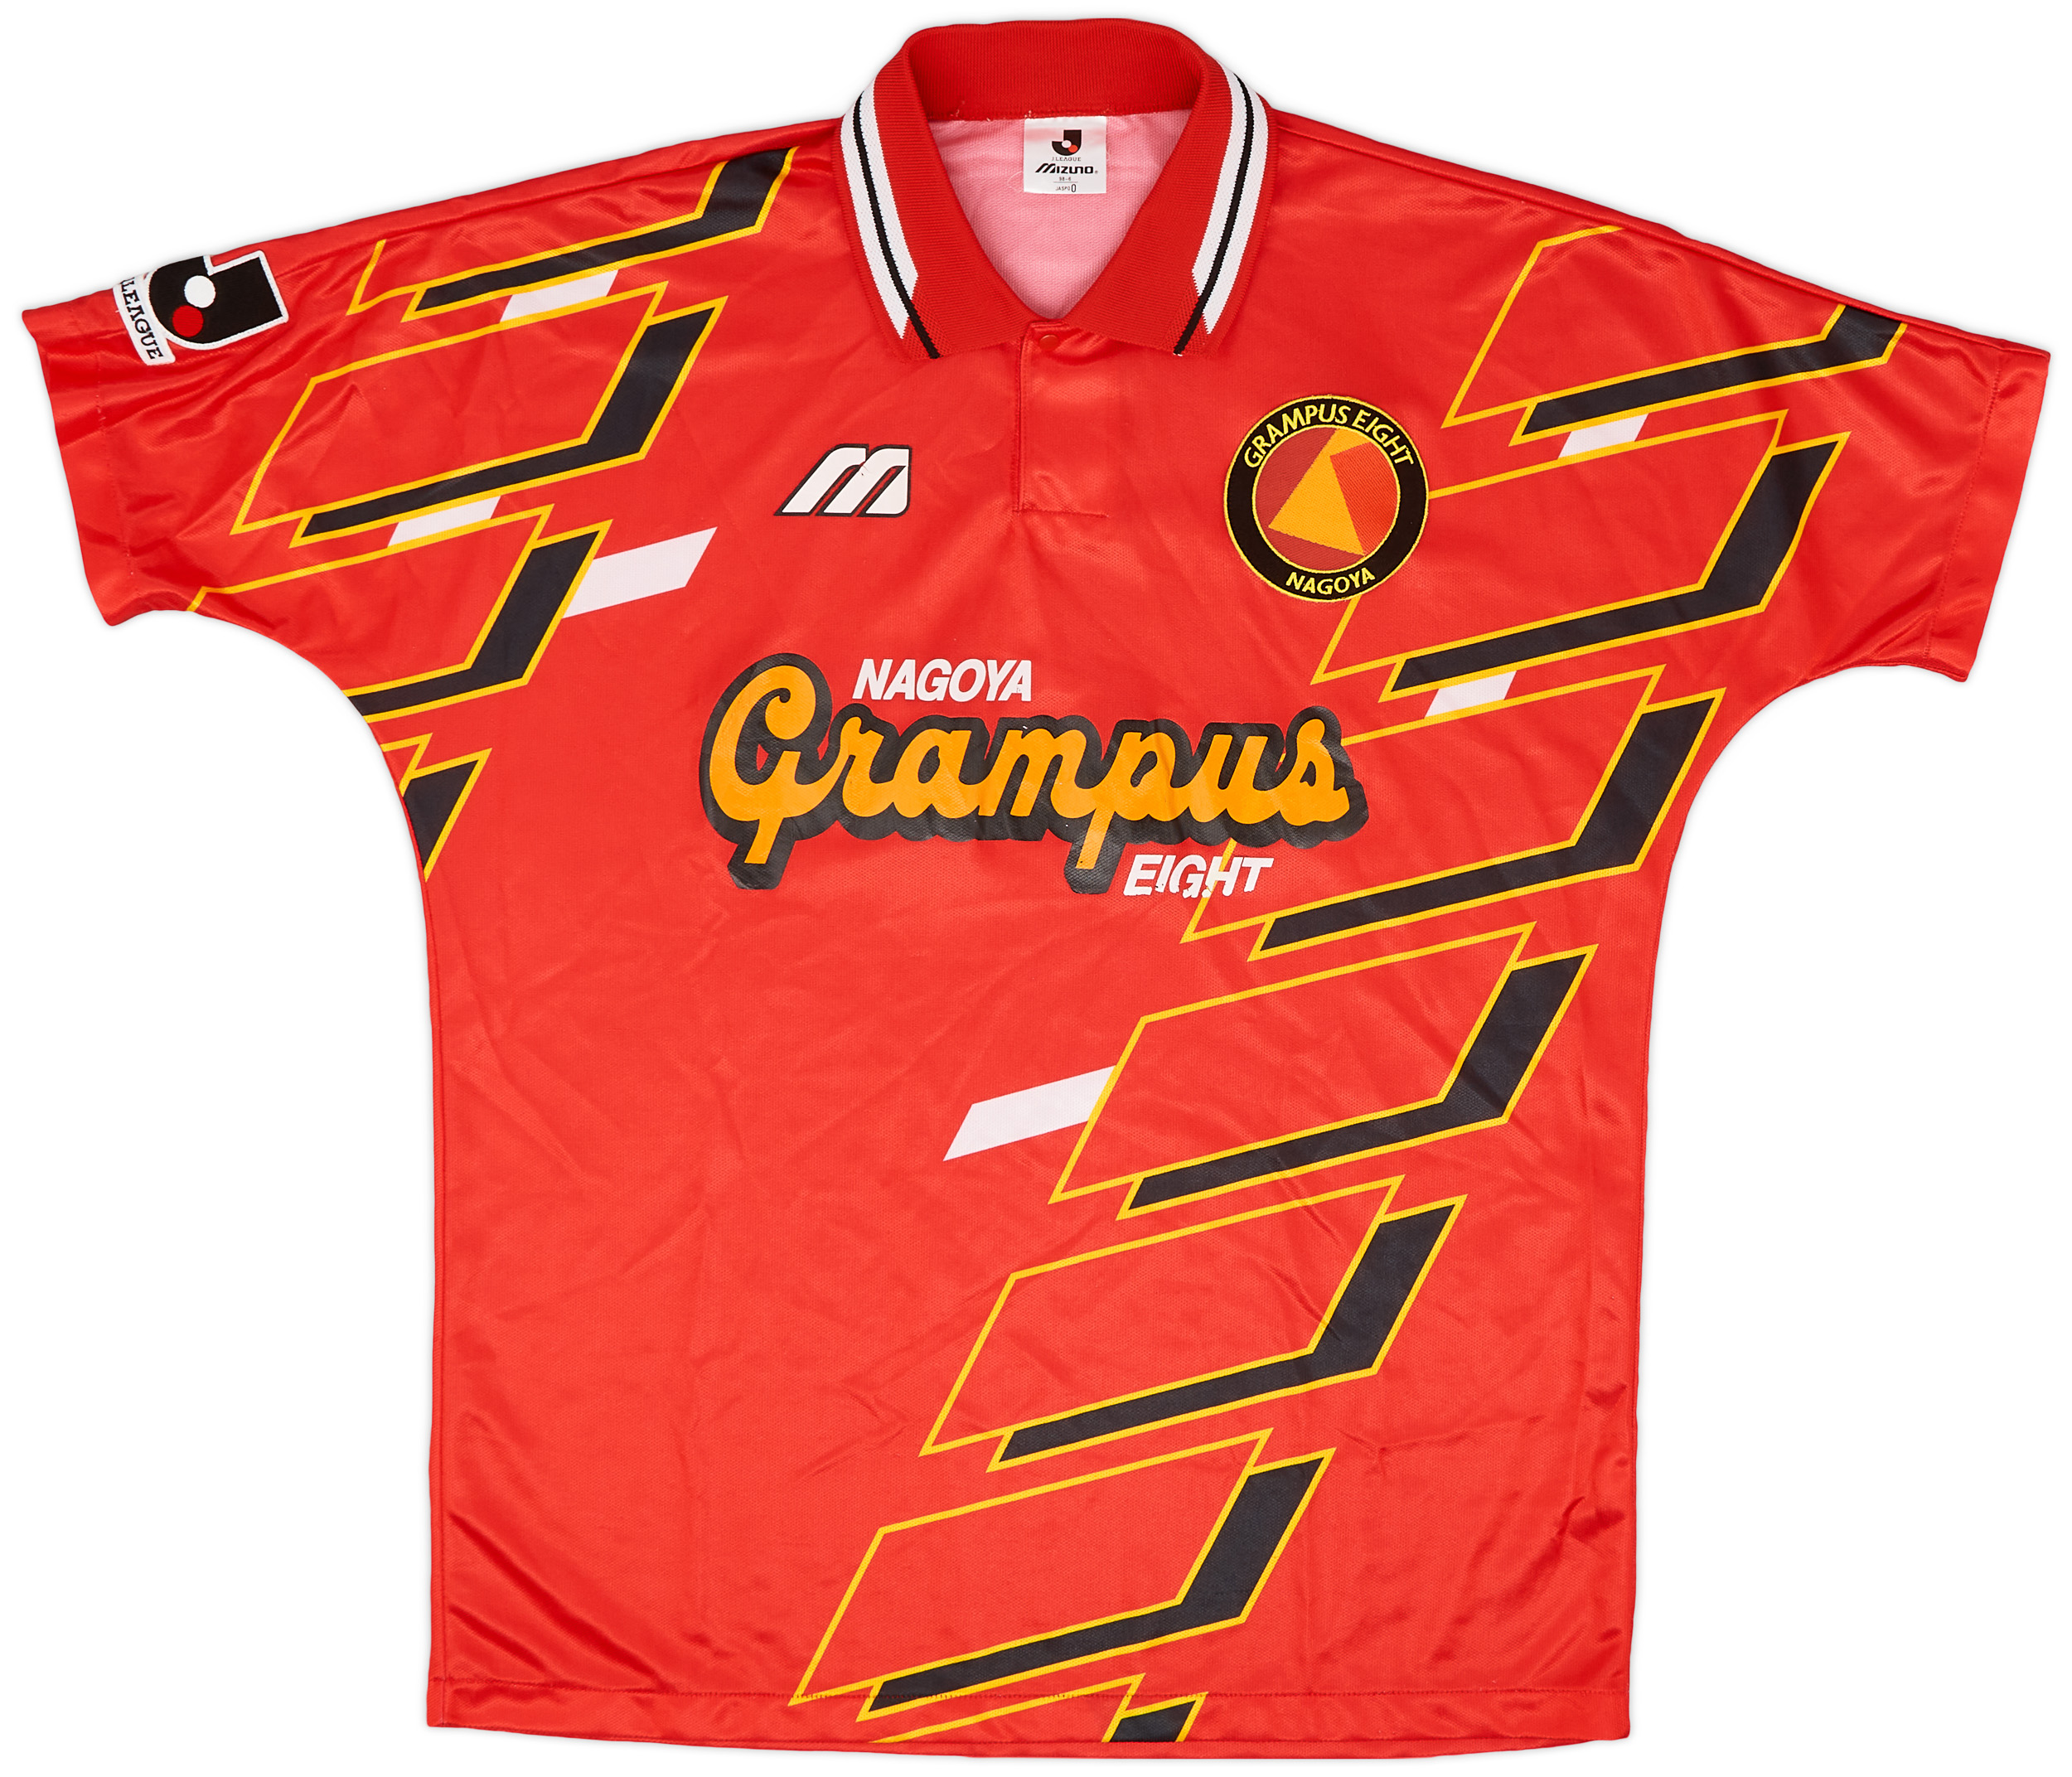 1995 Nagoya Grampus Eight Home Shirt - 8/10 - ()